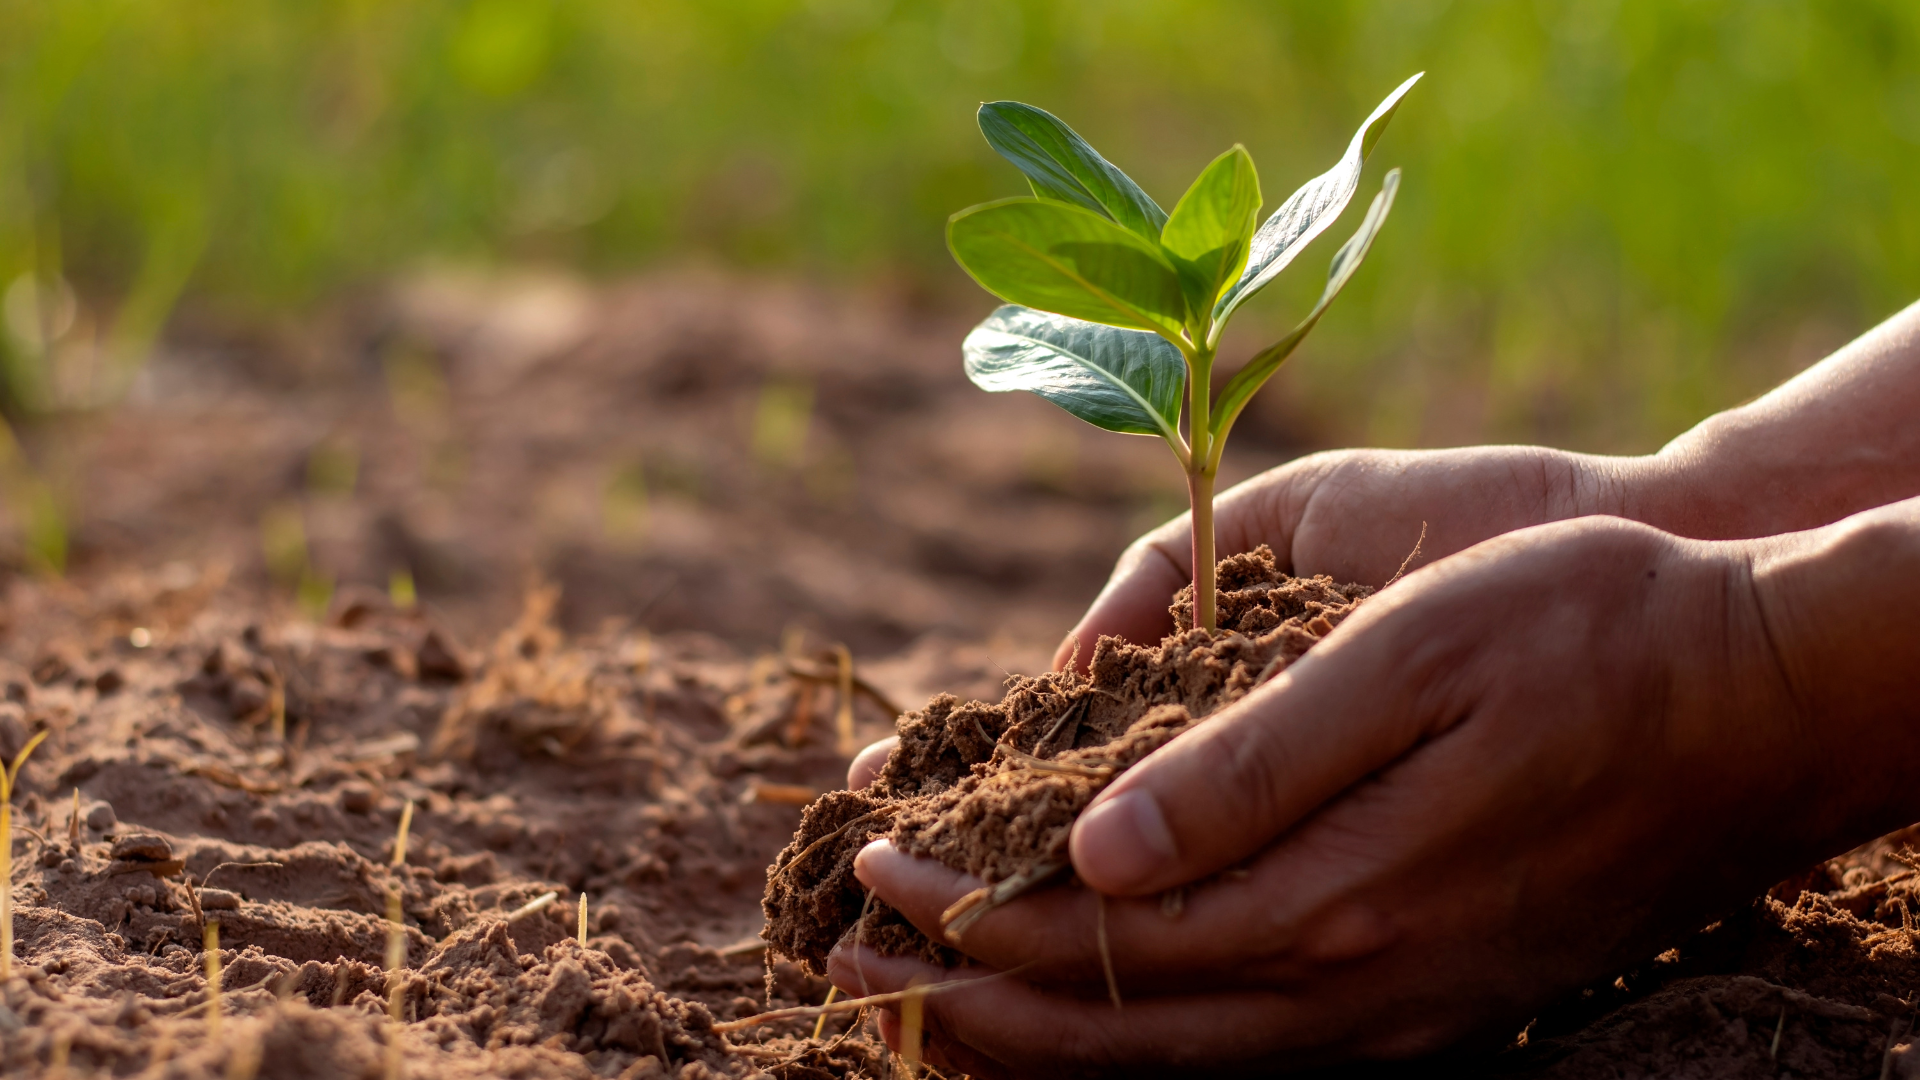 Hands planting seedling in healthy soil